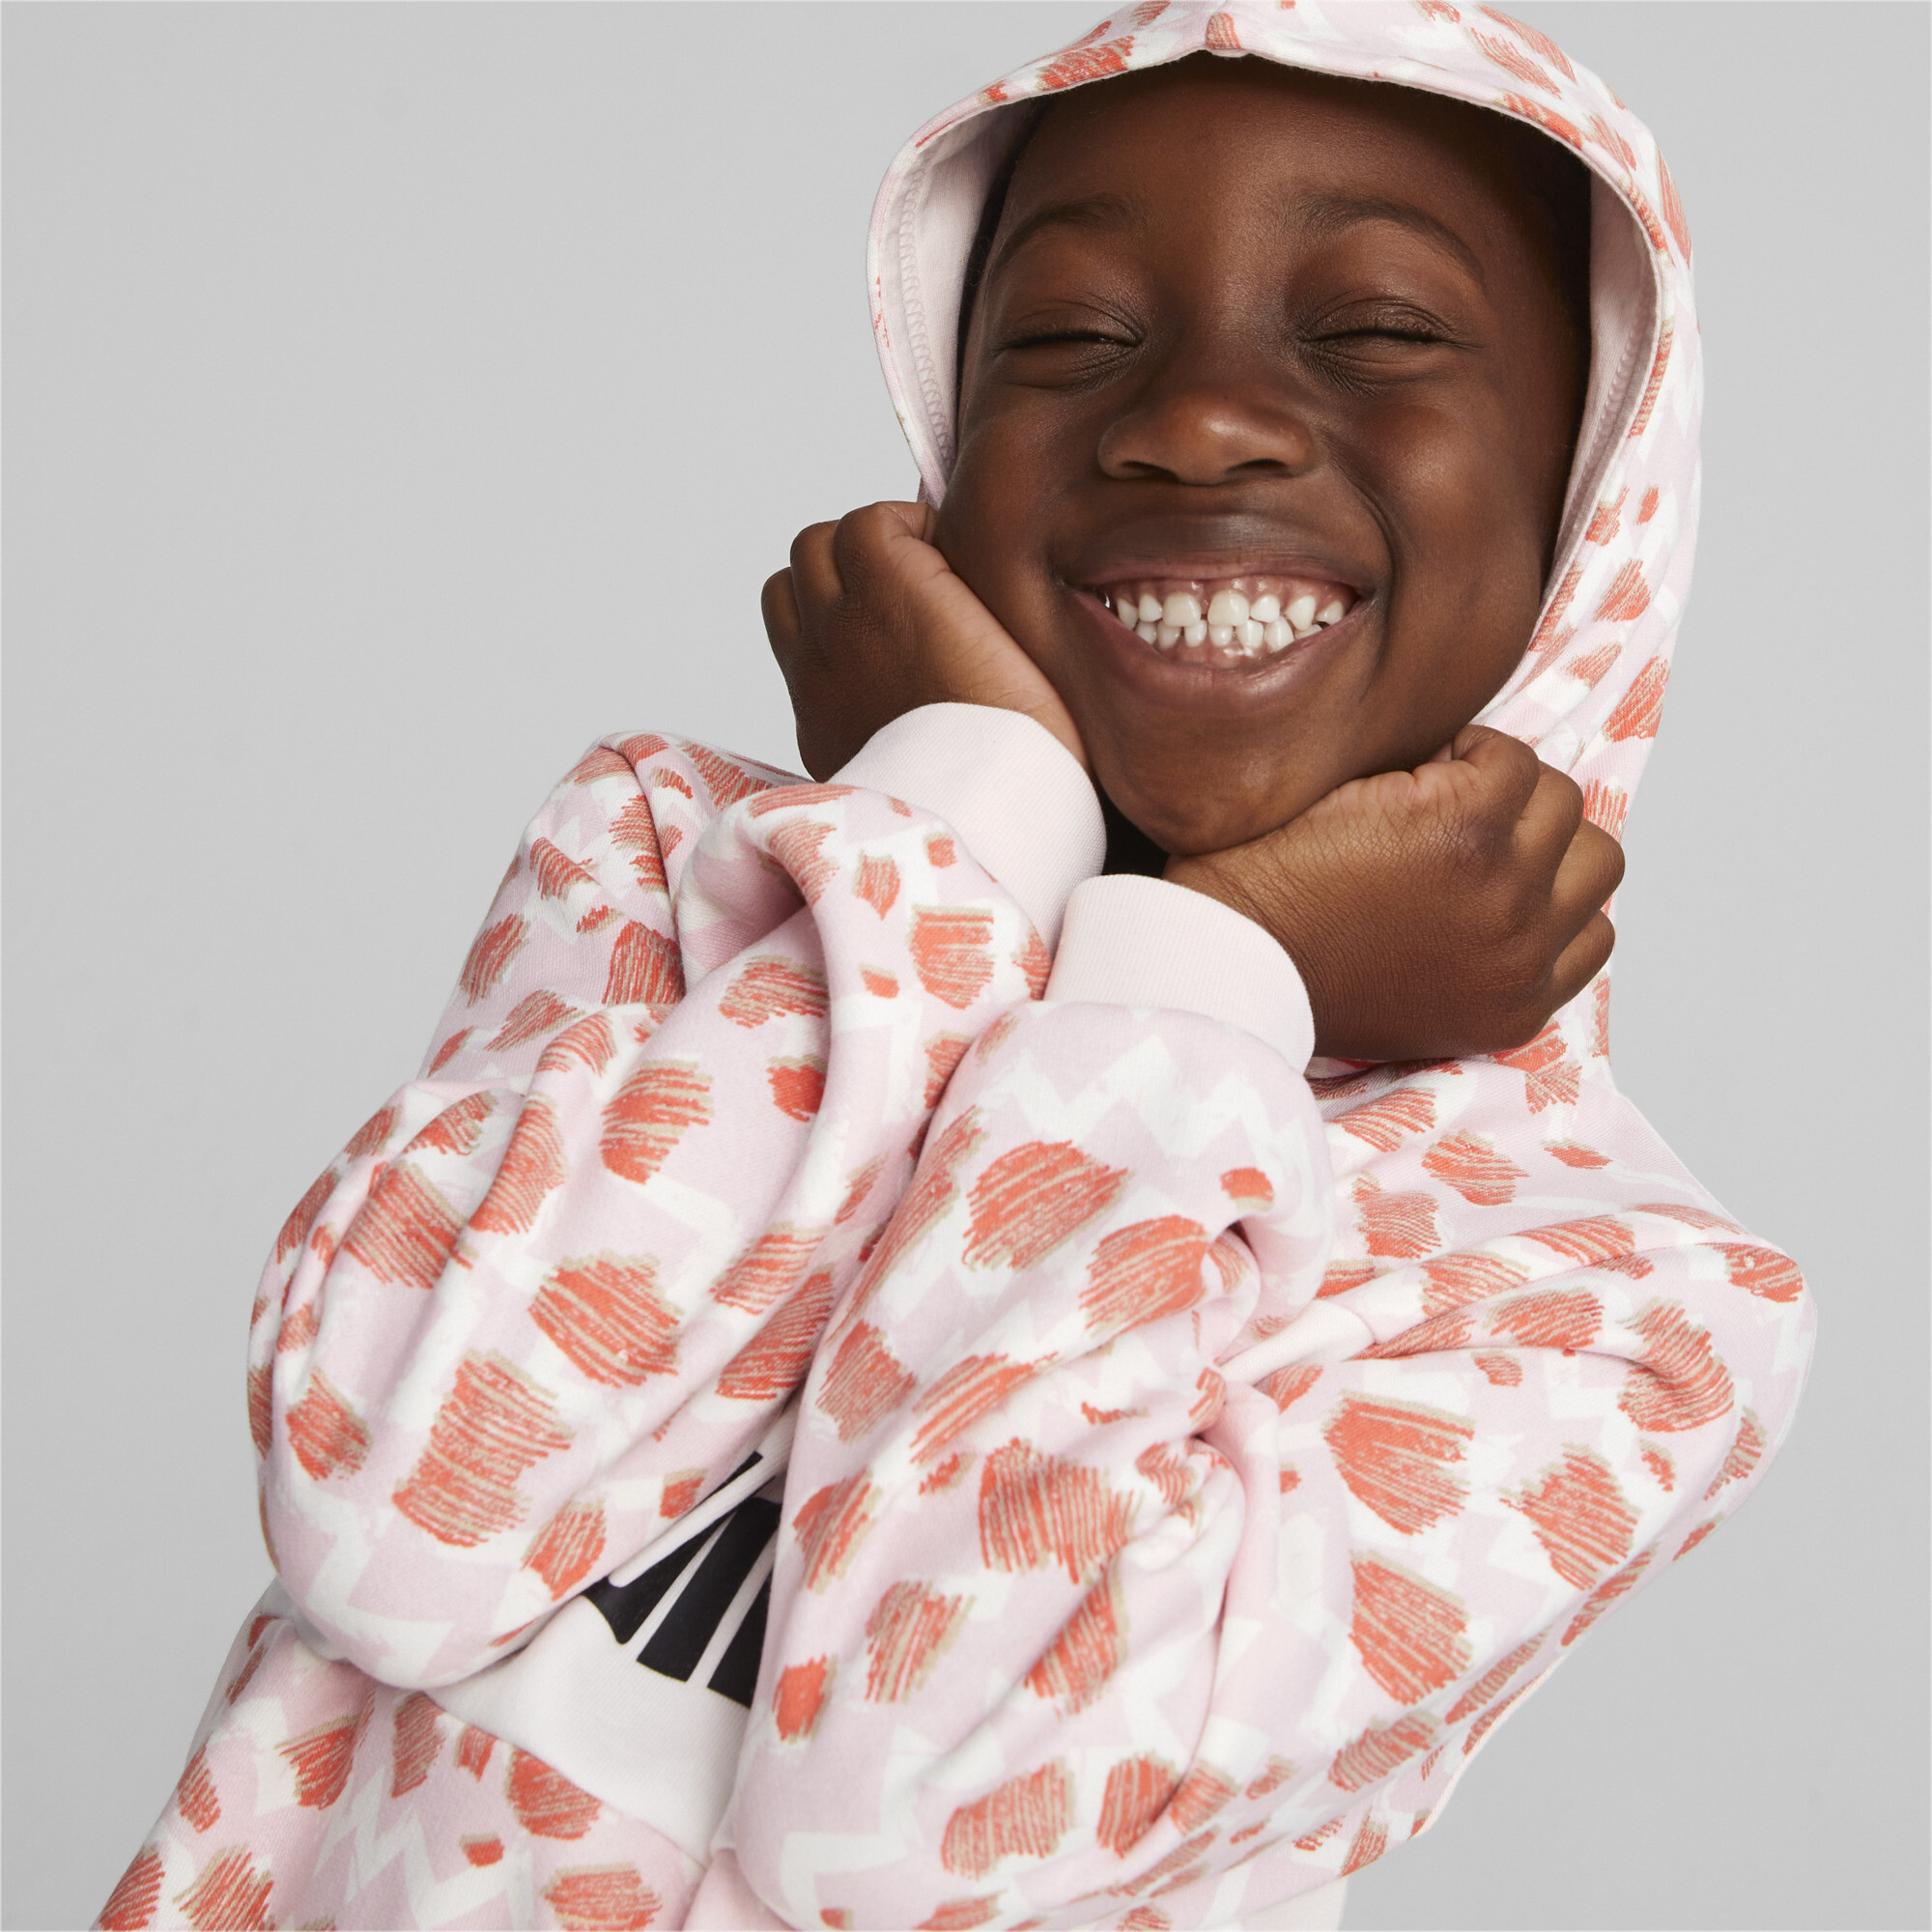 Puma Essentials Mix Match Kids' Hoodie, Pink, Size 2-3Y, Clothing